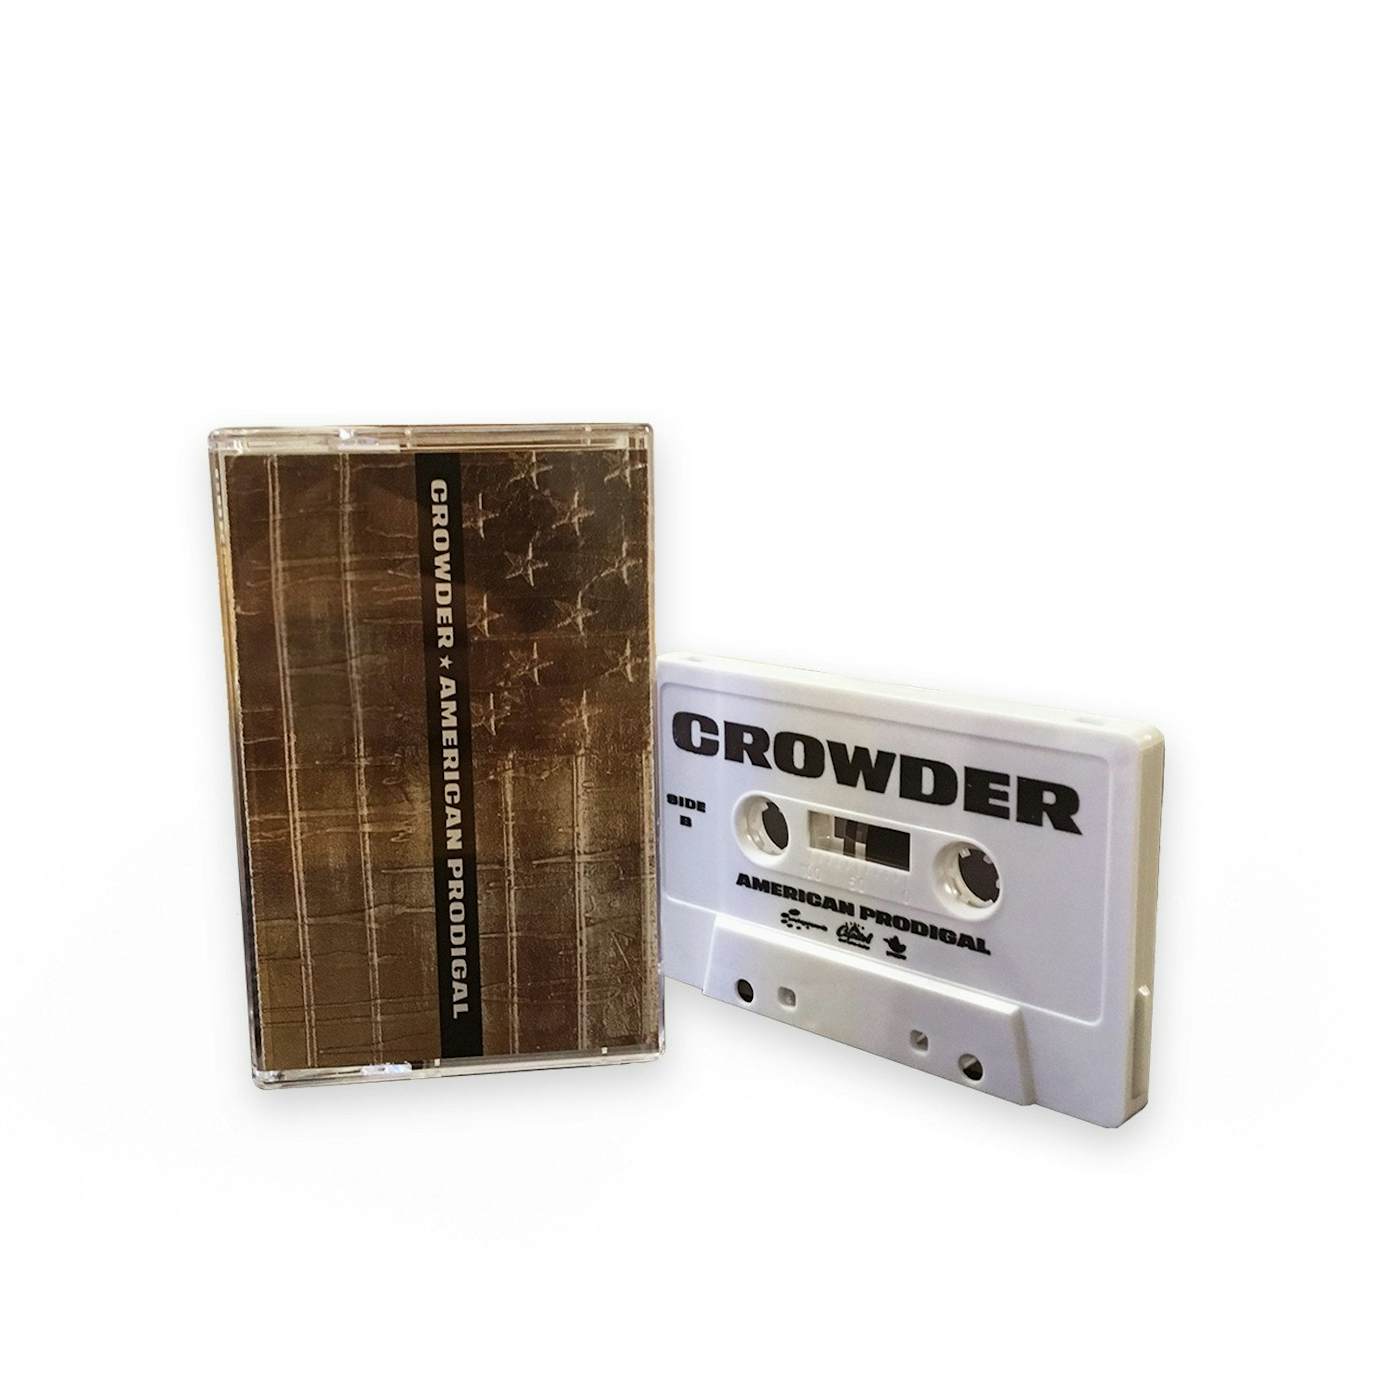 Crowder 'American Prodigal' Cassette